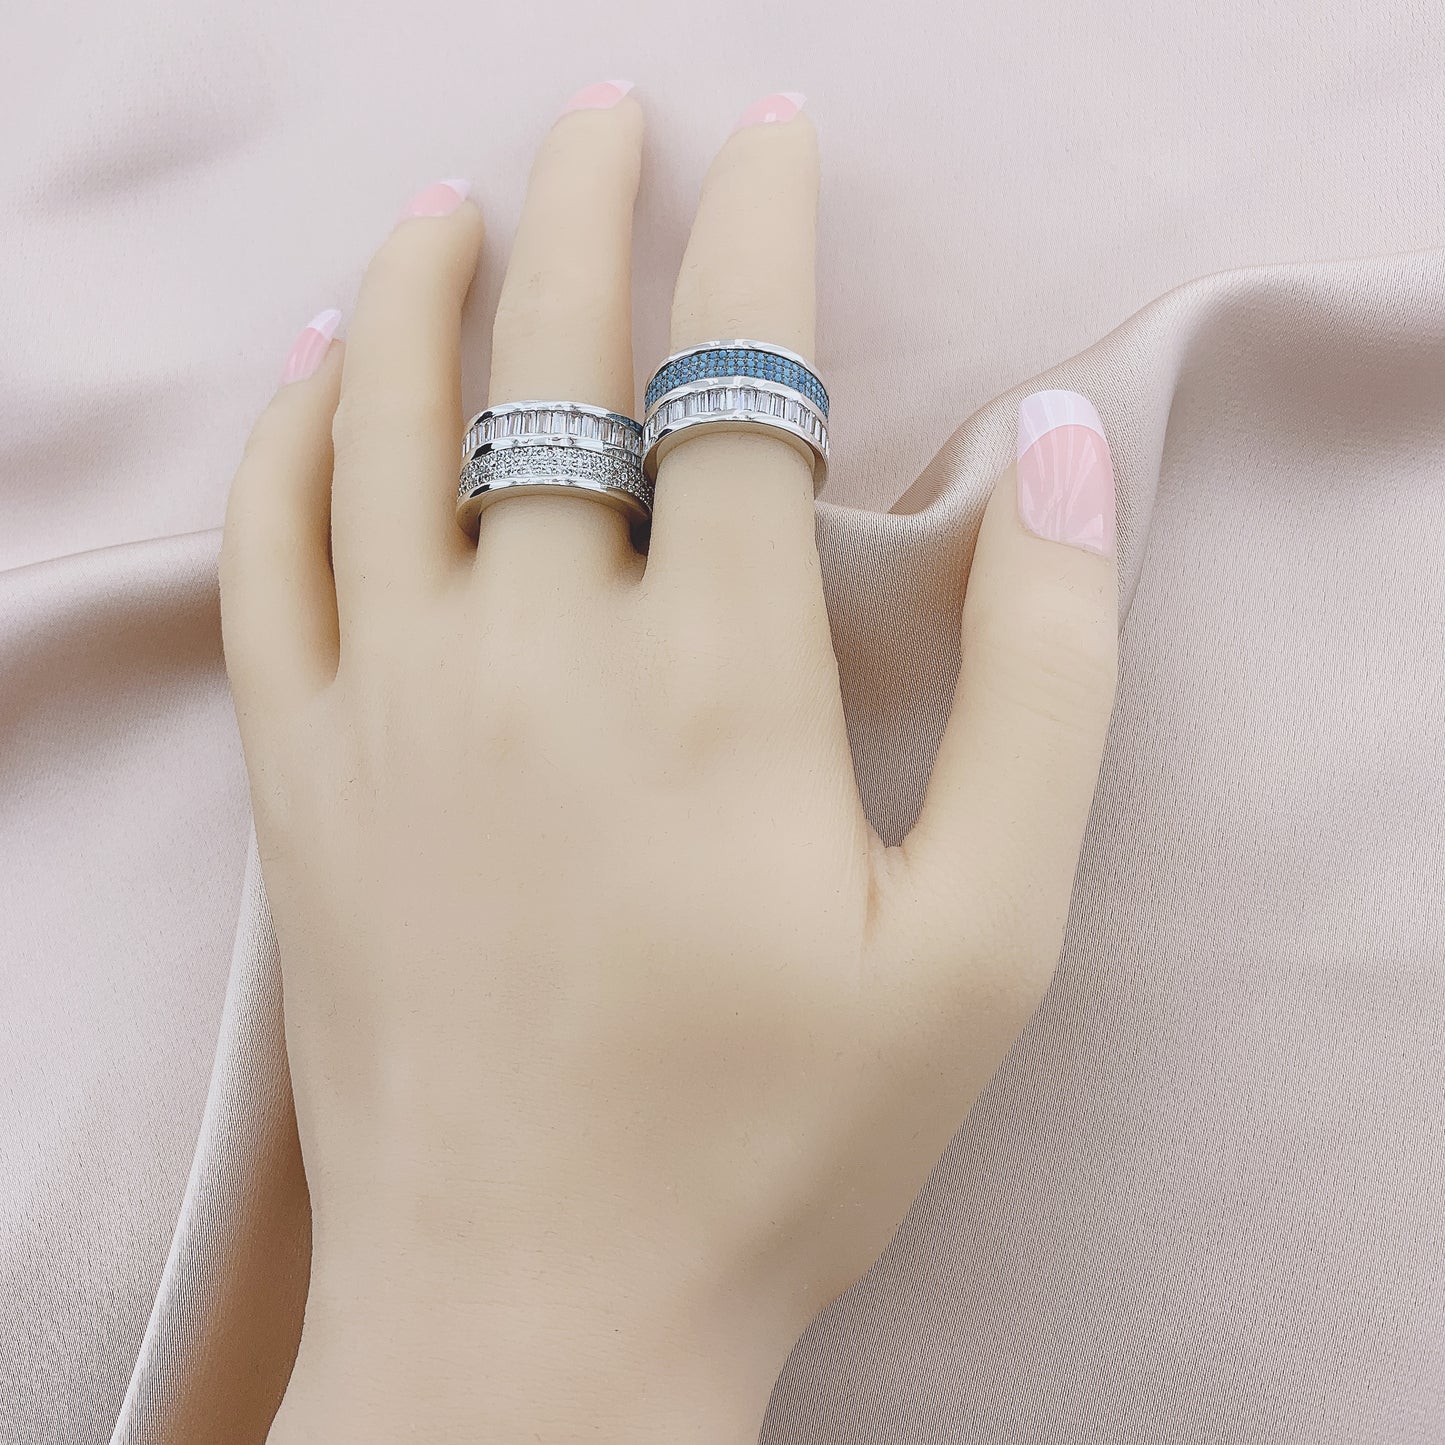 Women's Luxury Cubic Zirconia Ring